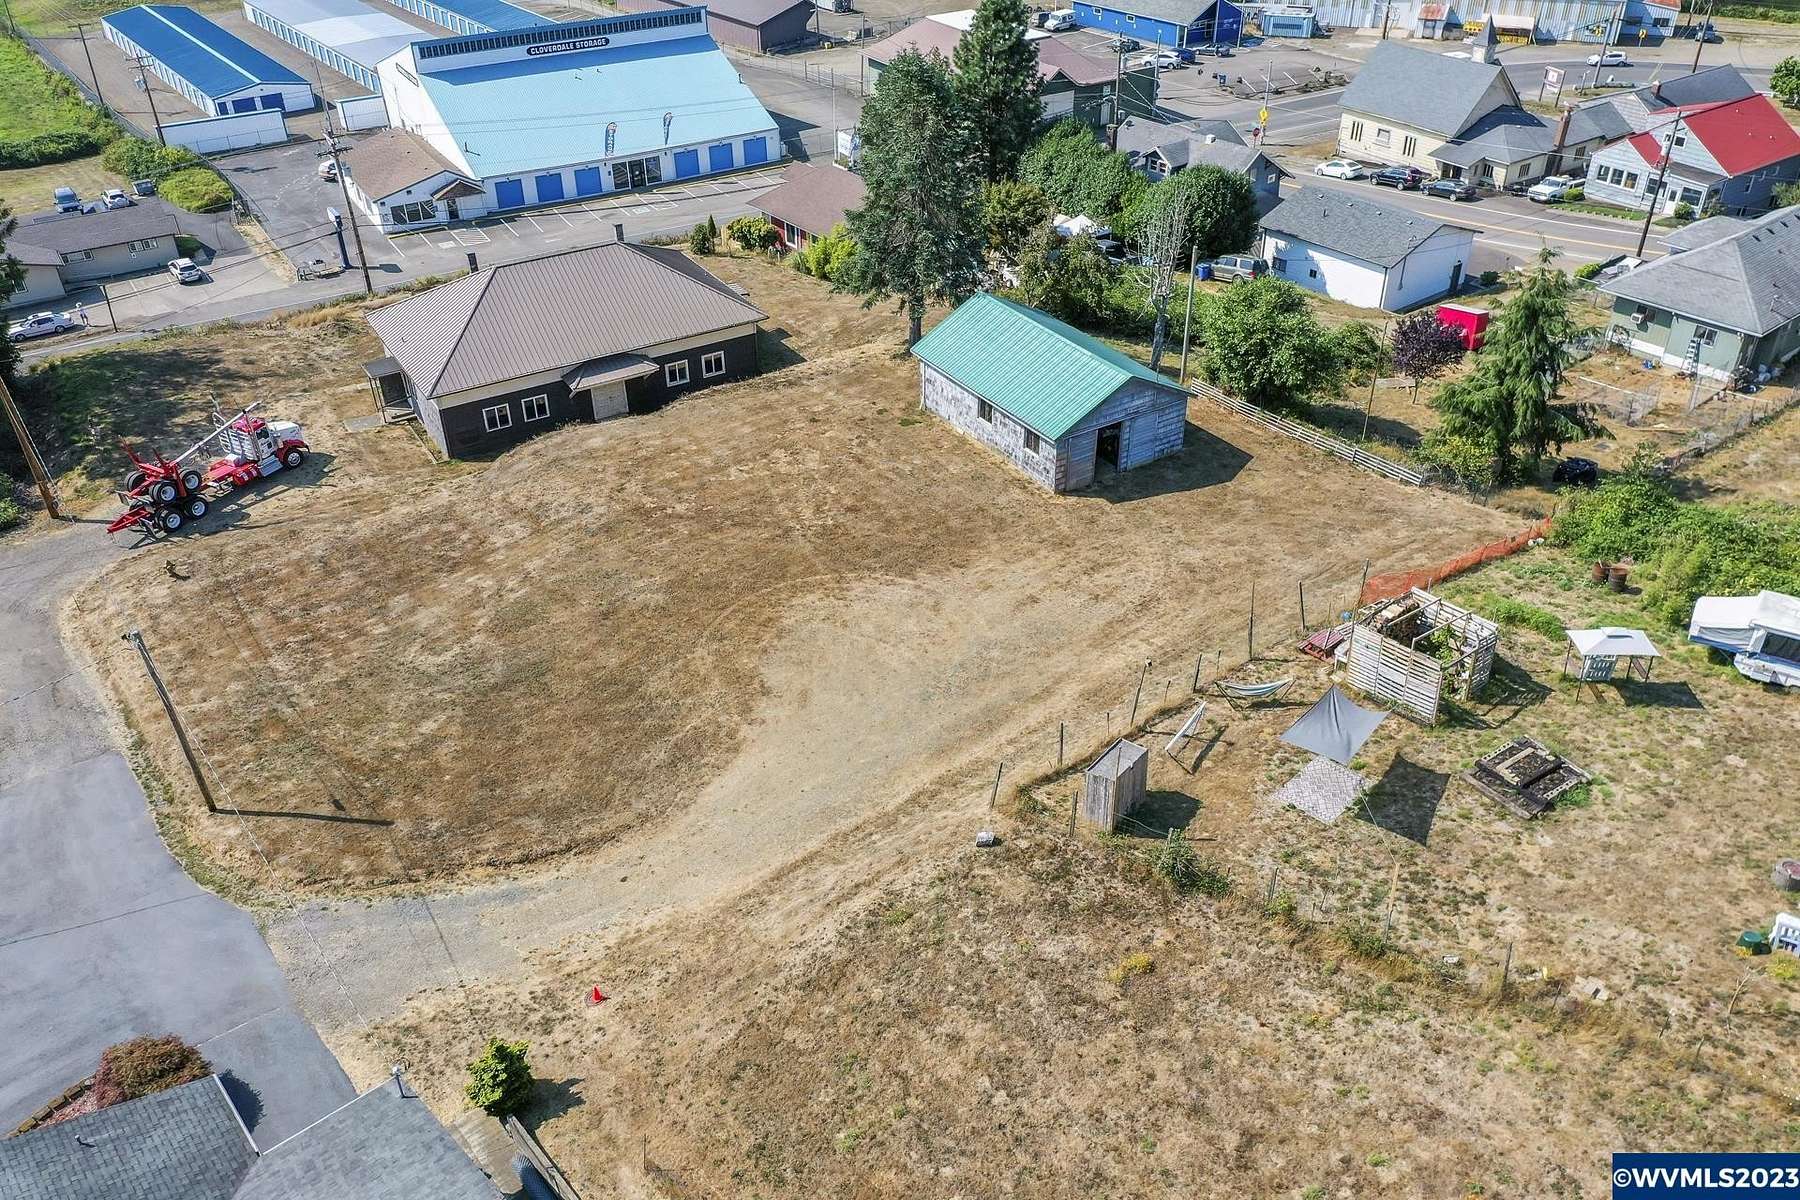 0.43 Acres of Land for Sale in Cloverdale, Oregon